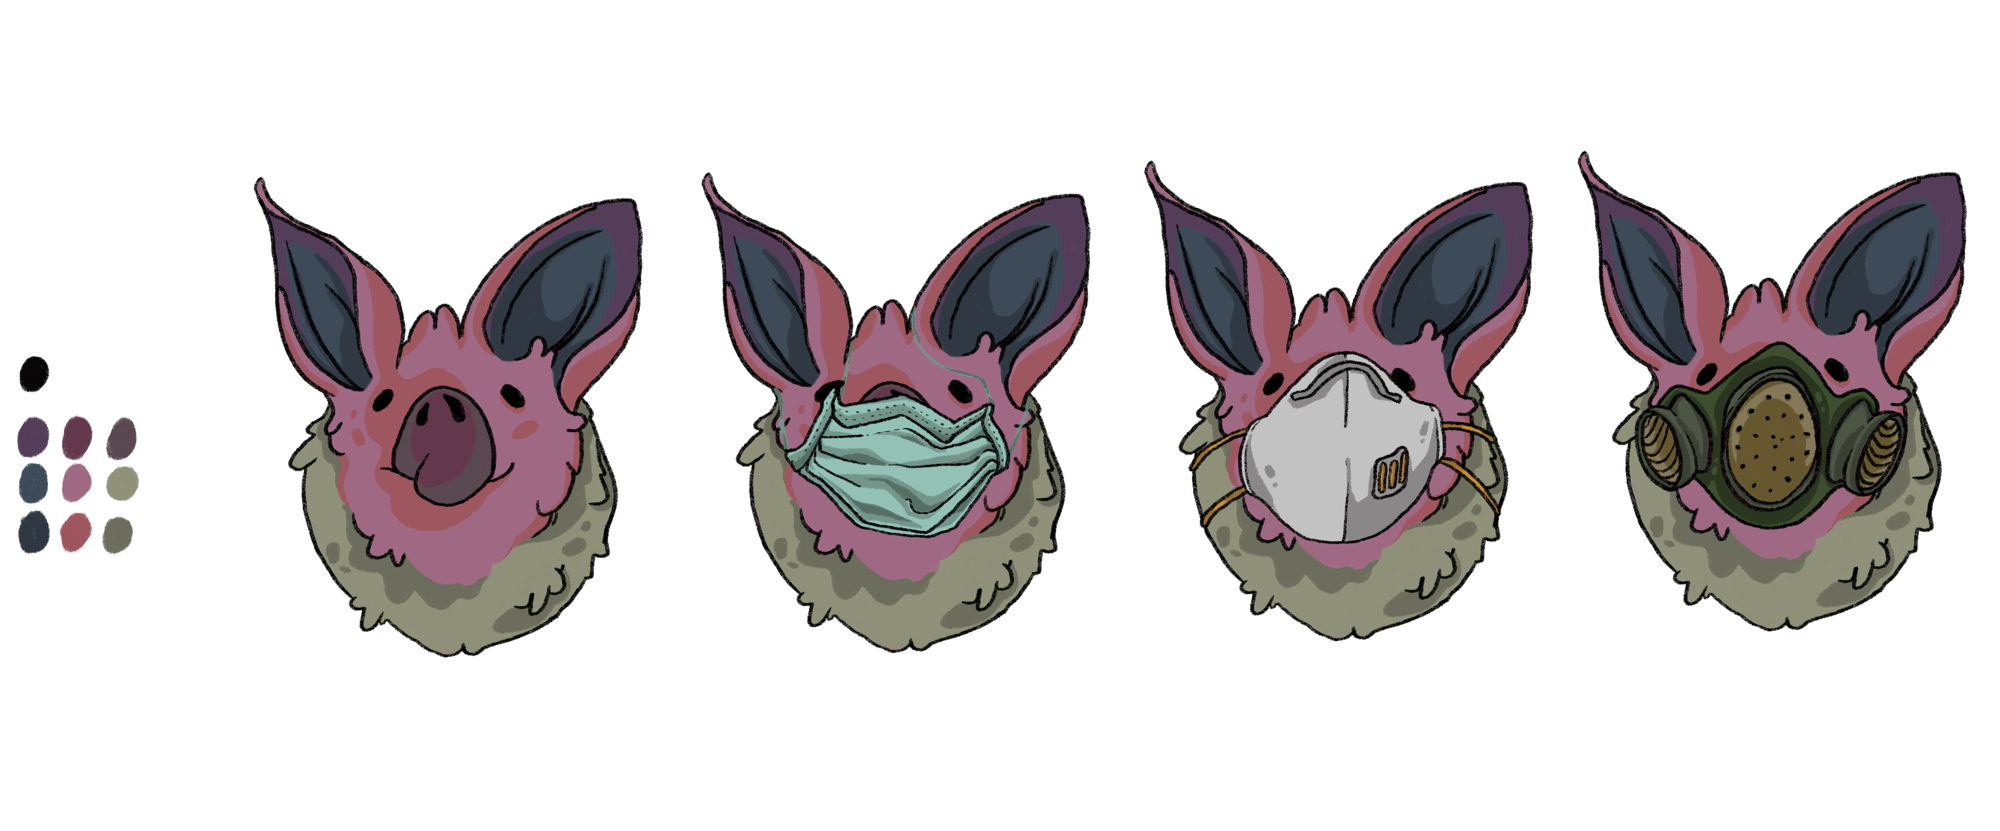 Artwork - Bats with Masks